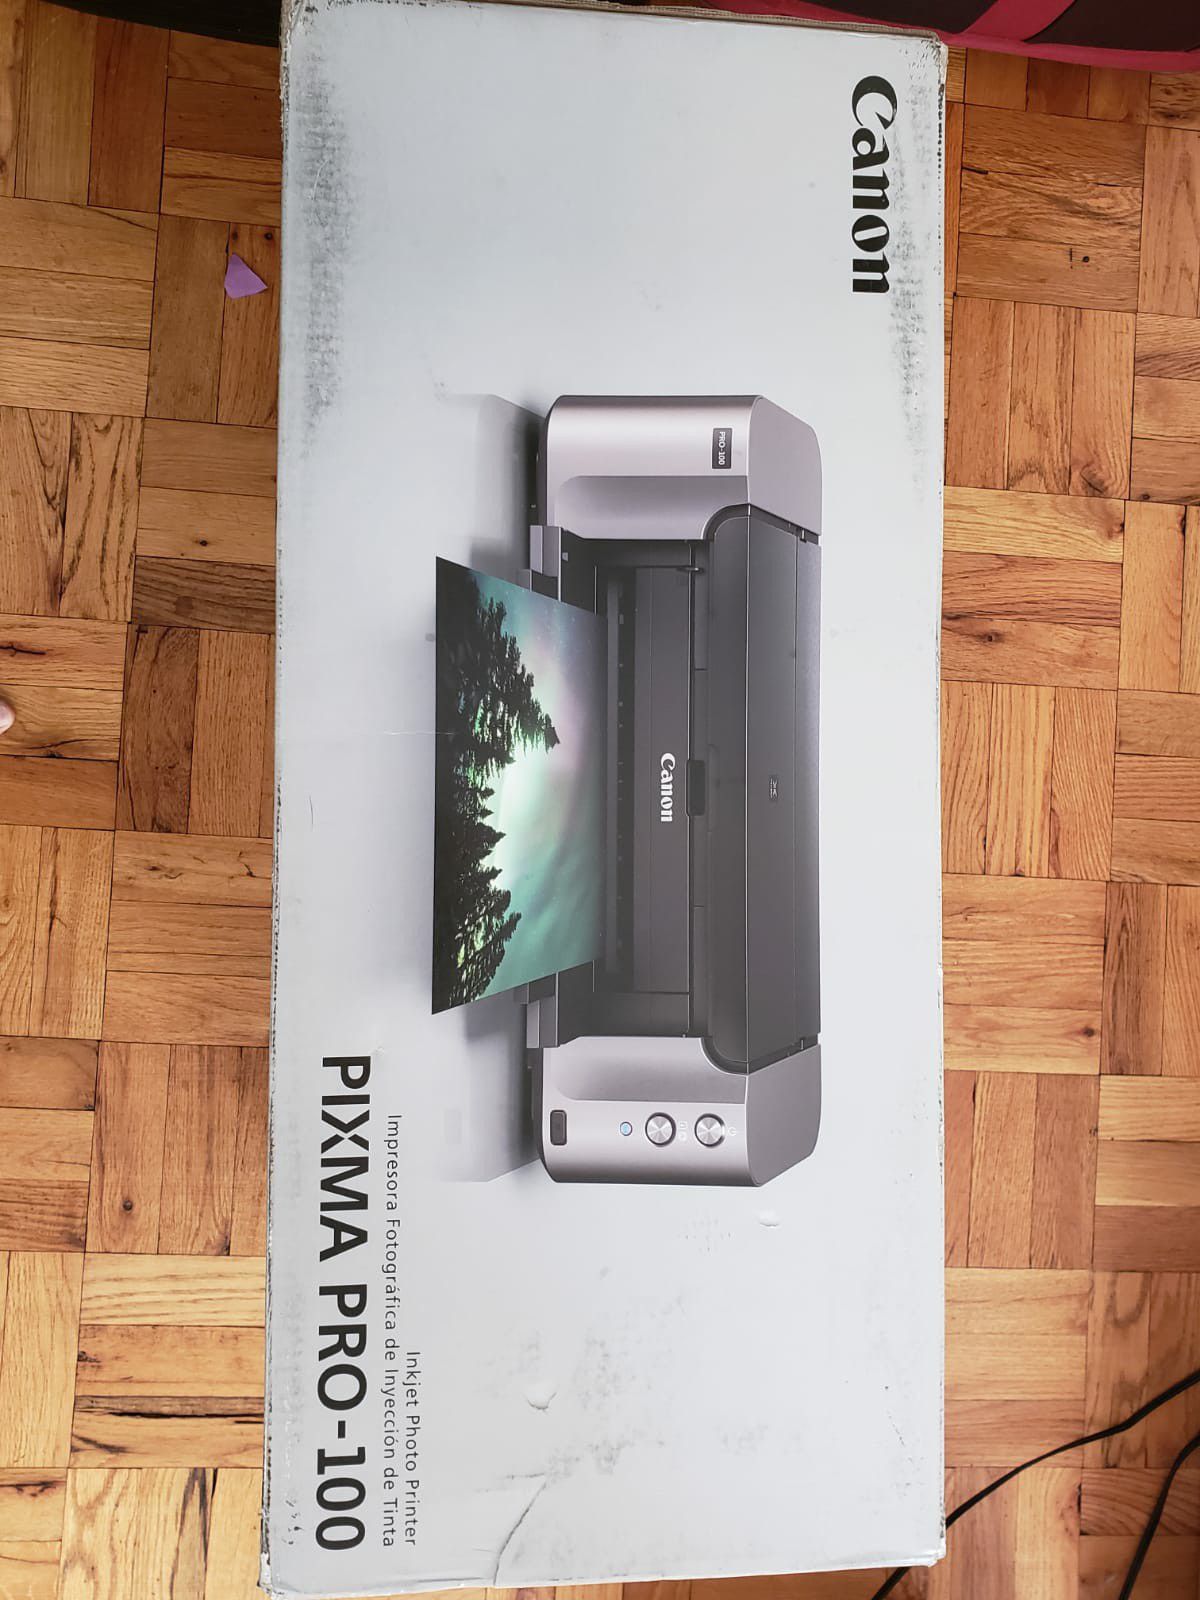 Canon Pixma Pro-100 Color Photo Inkjet Printer with 50 sheets(13"x19") Photo Paper